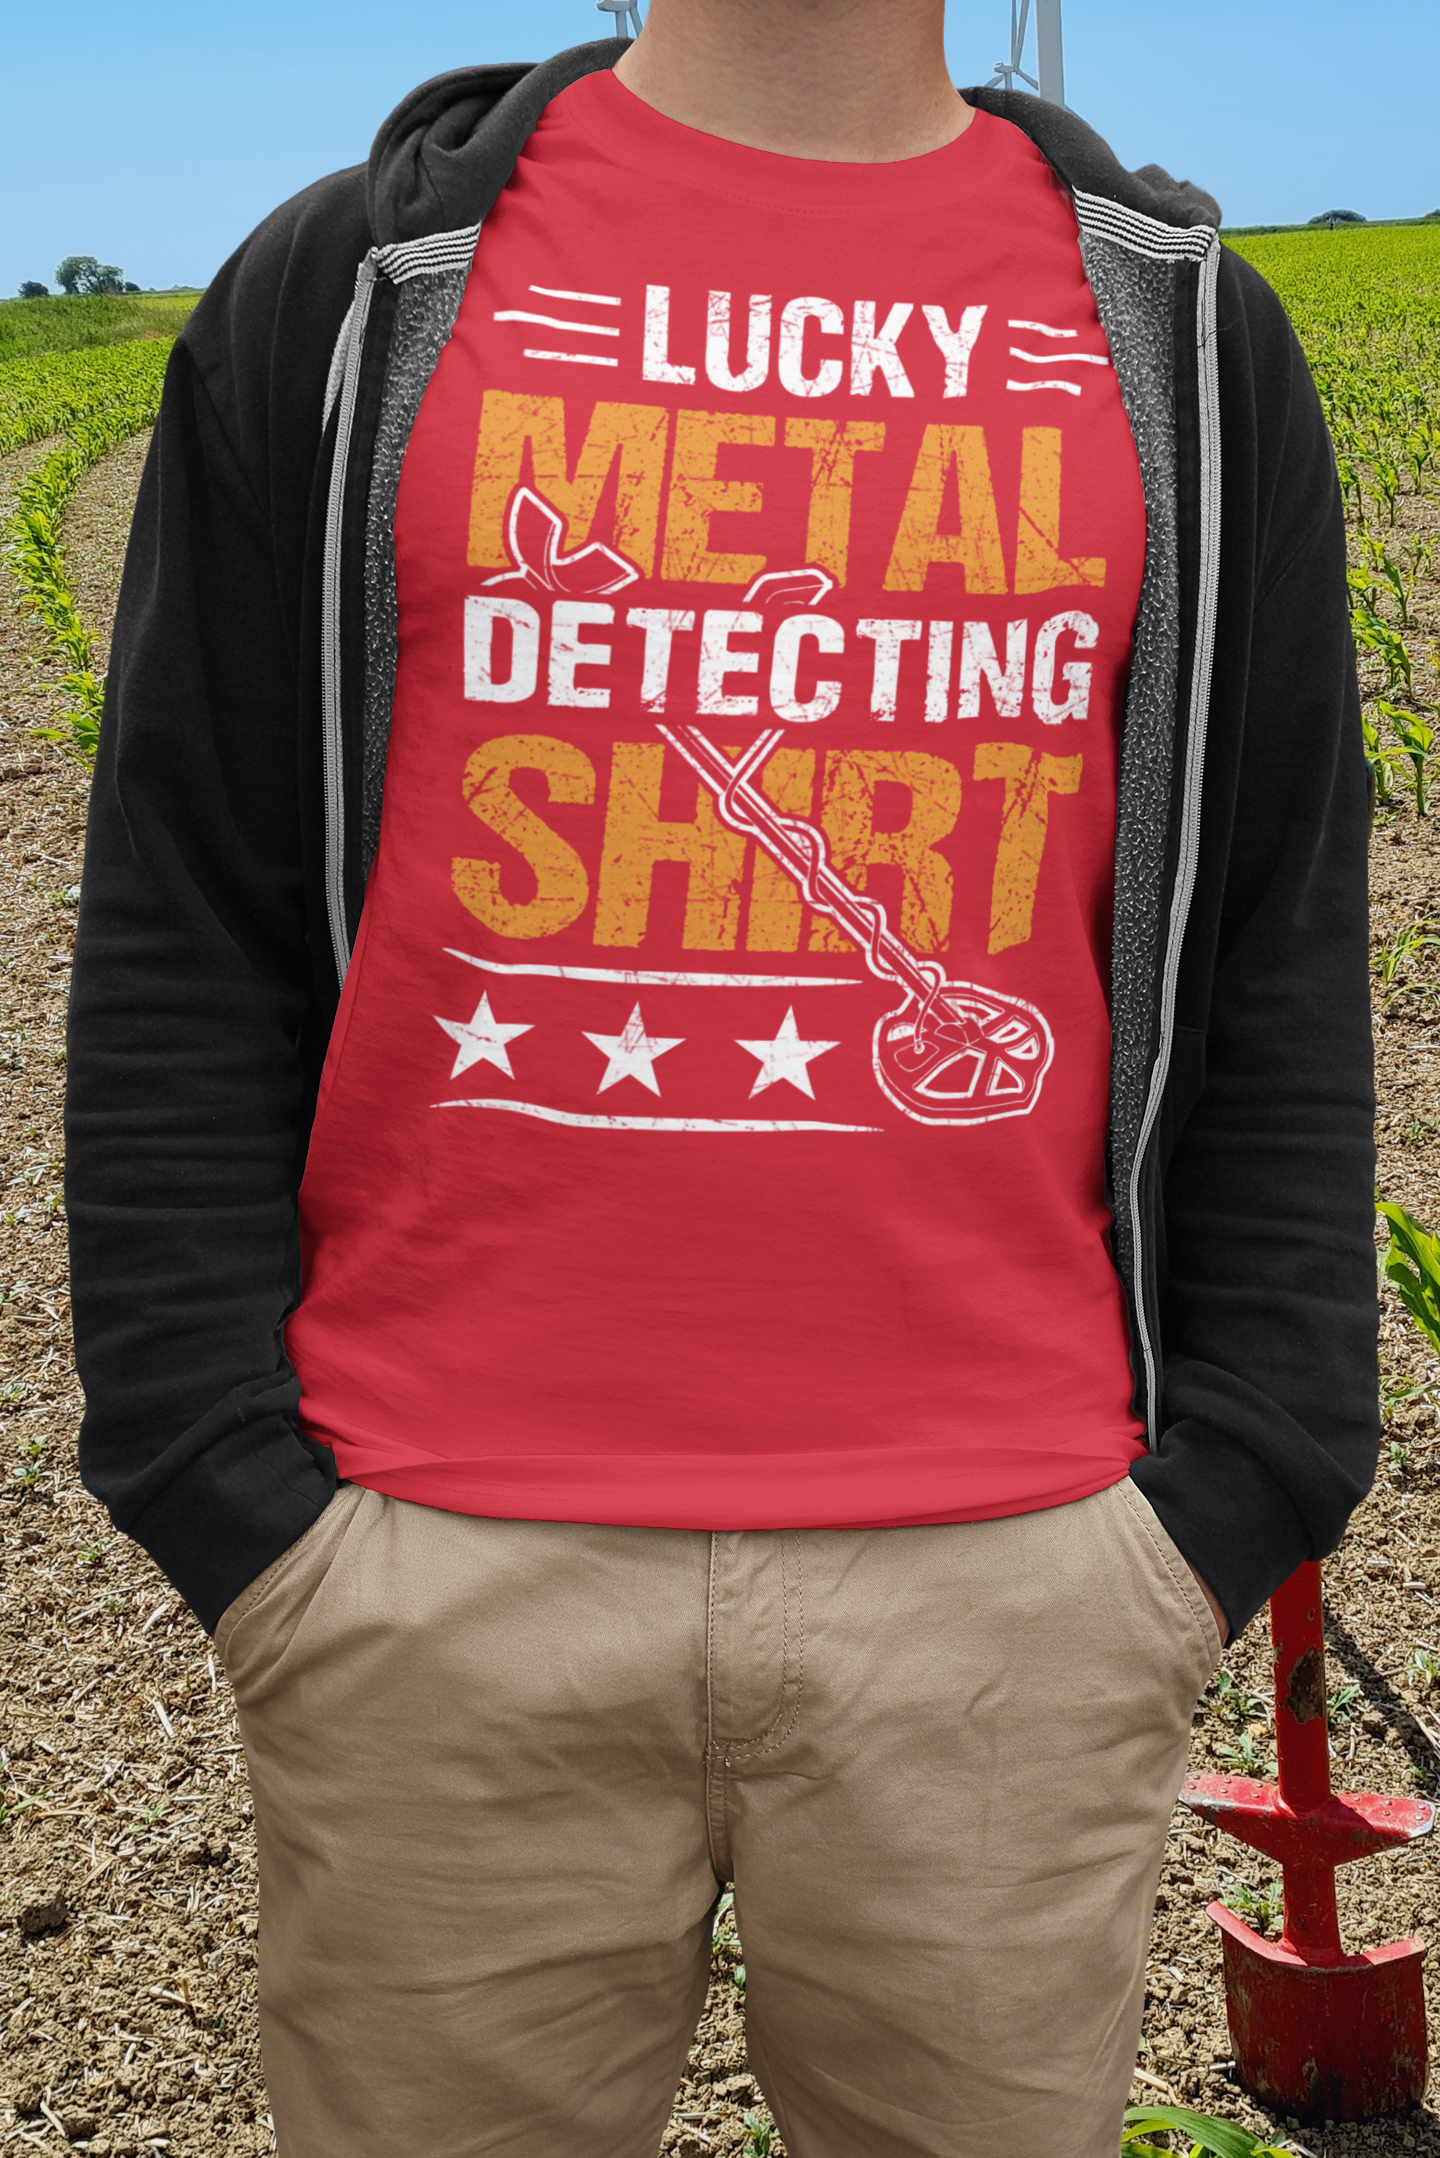 Lucky metal detecting t-shirt